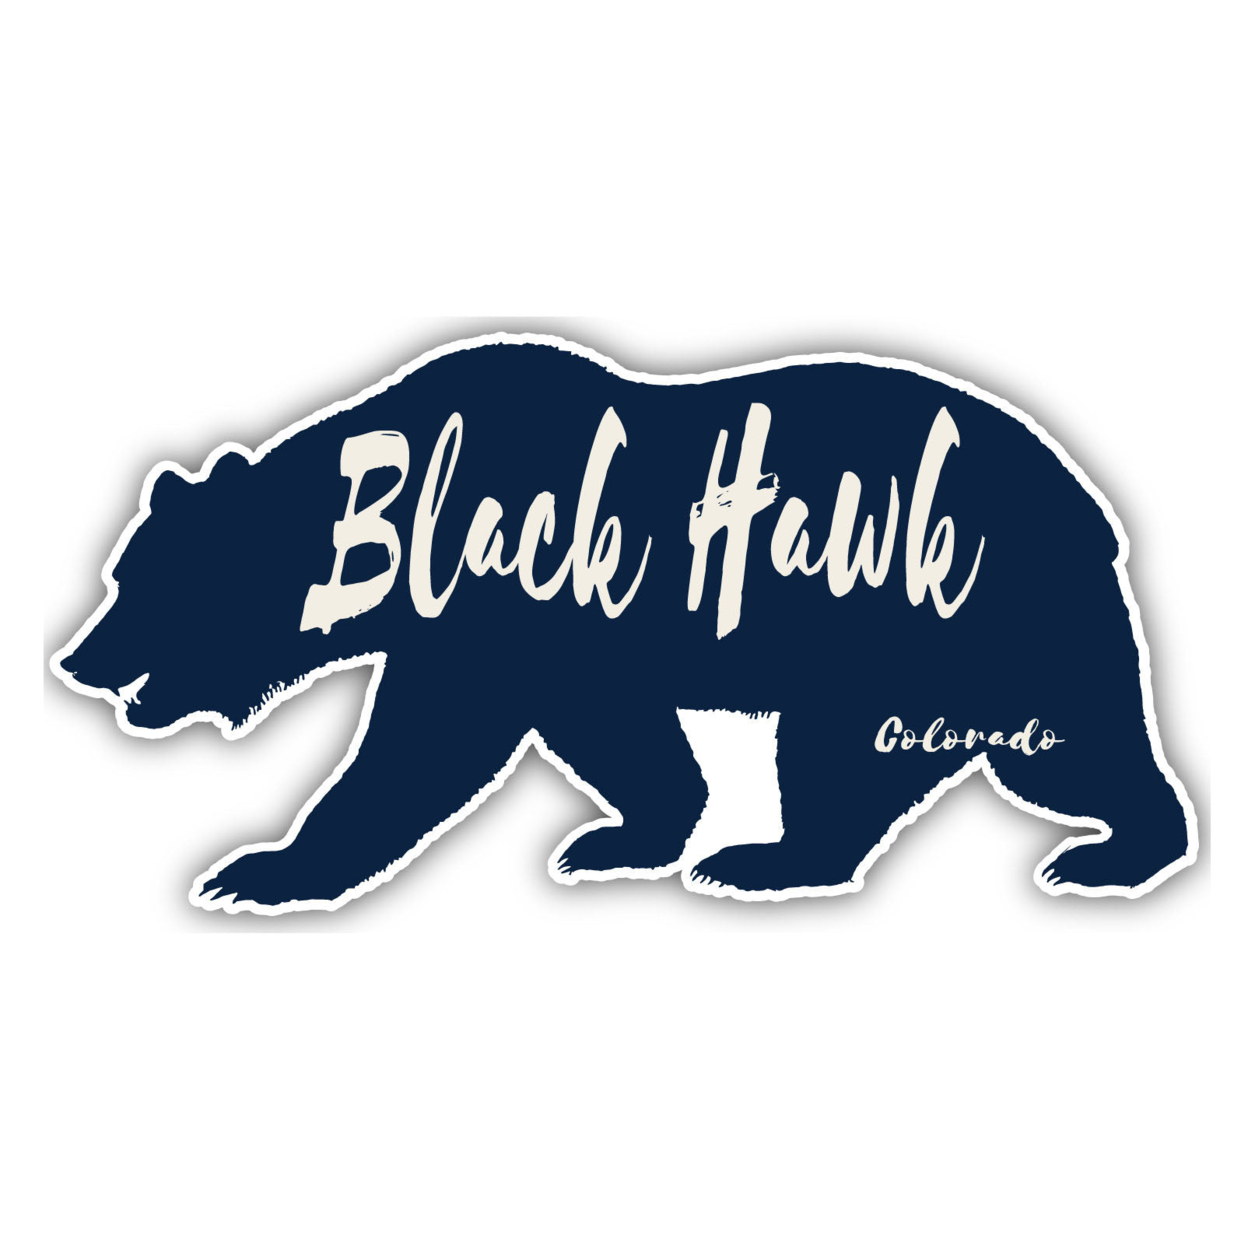 Black Hawk Colorado Souvenir Decorative Stickers (Choose Theme And Size) - Single Unit, 2-Inch, Bear